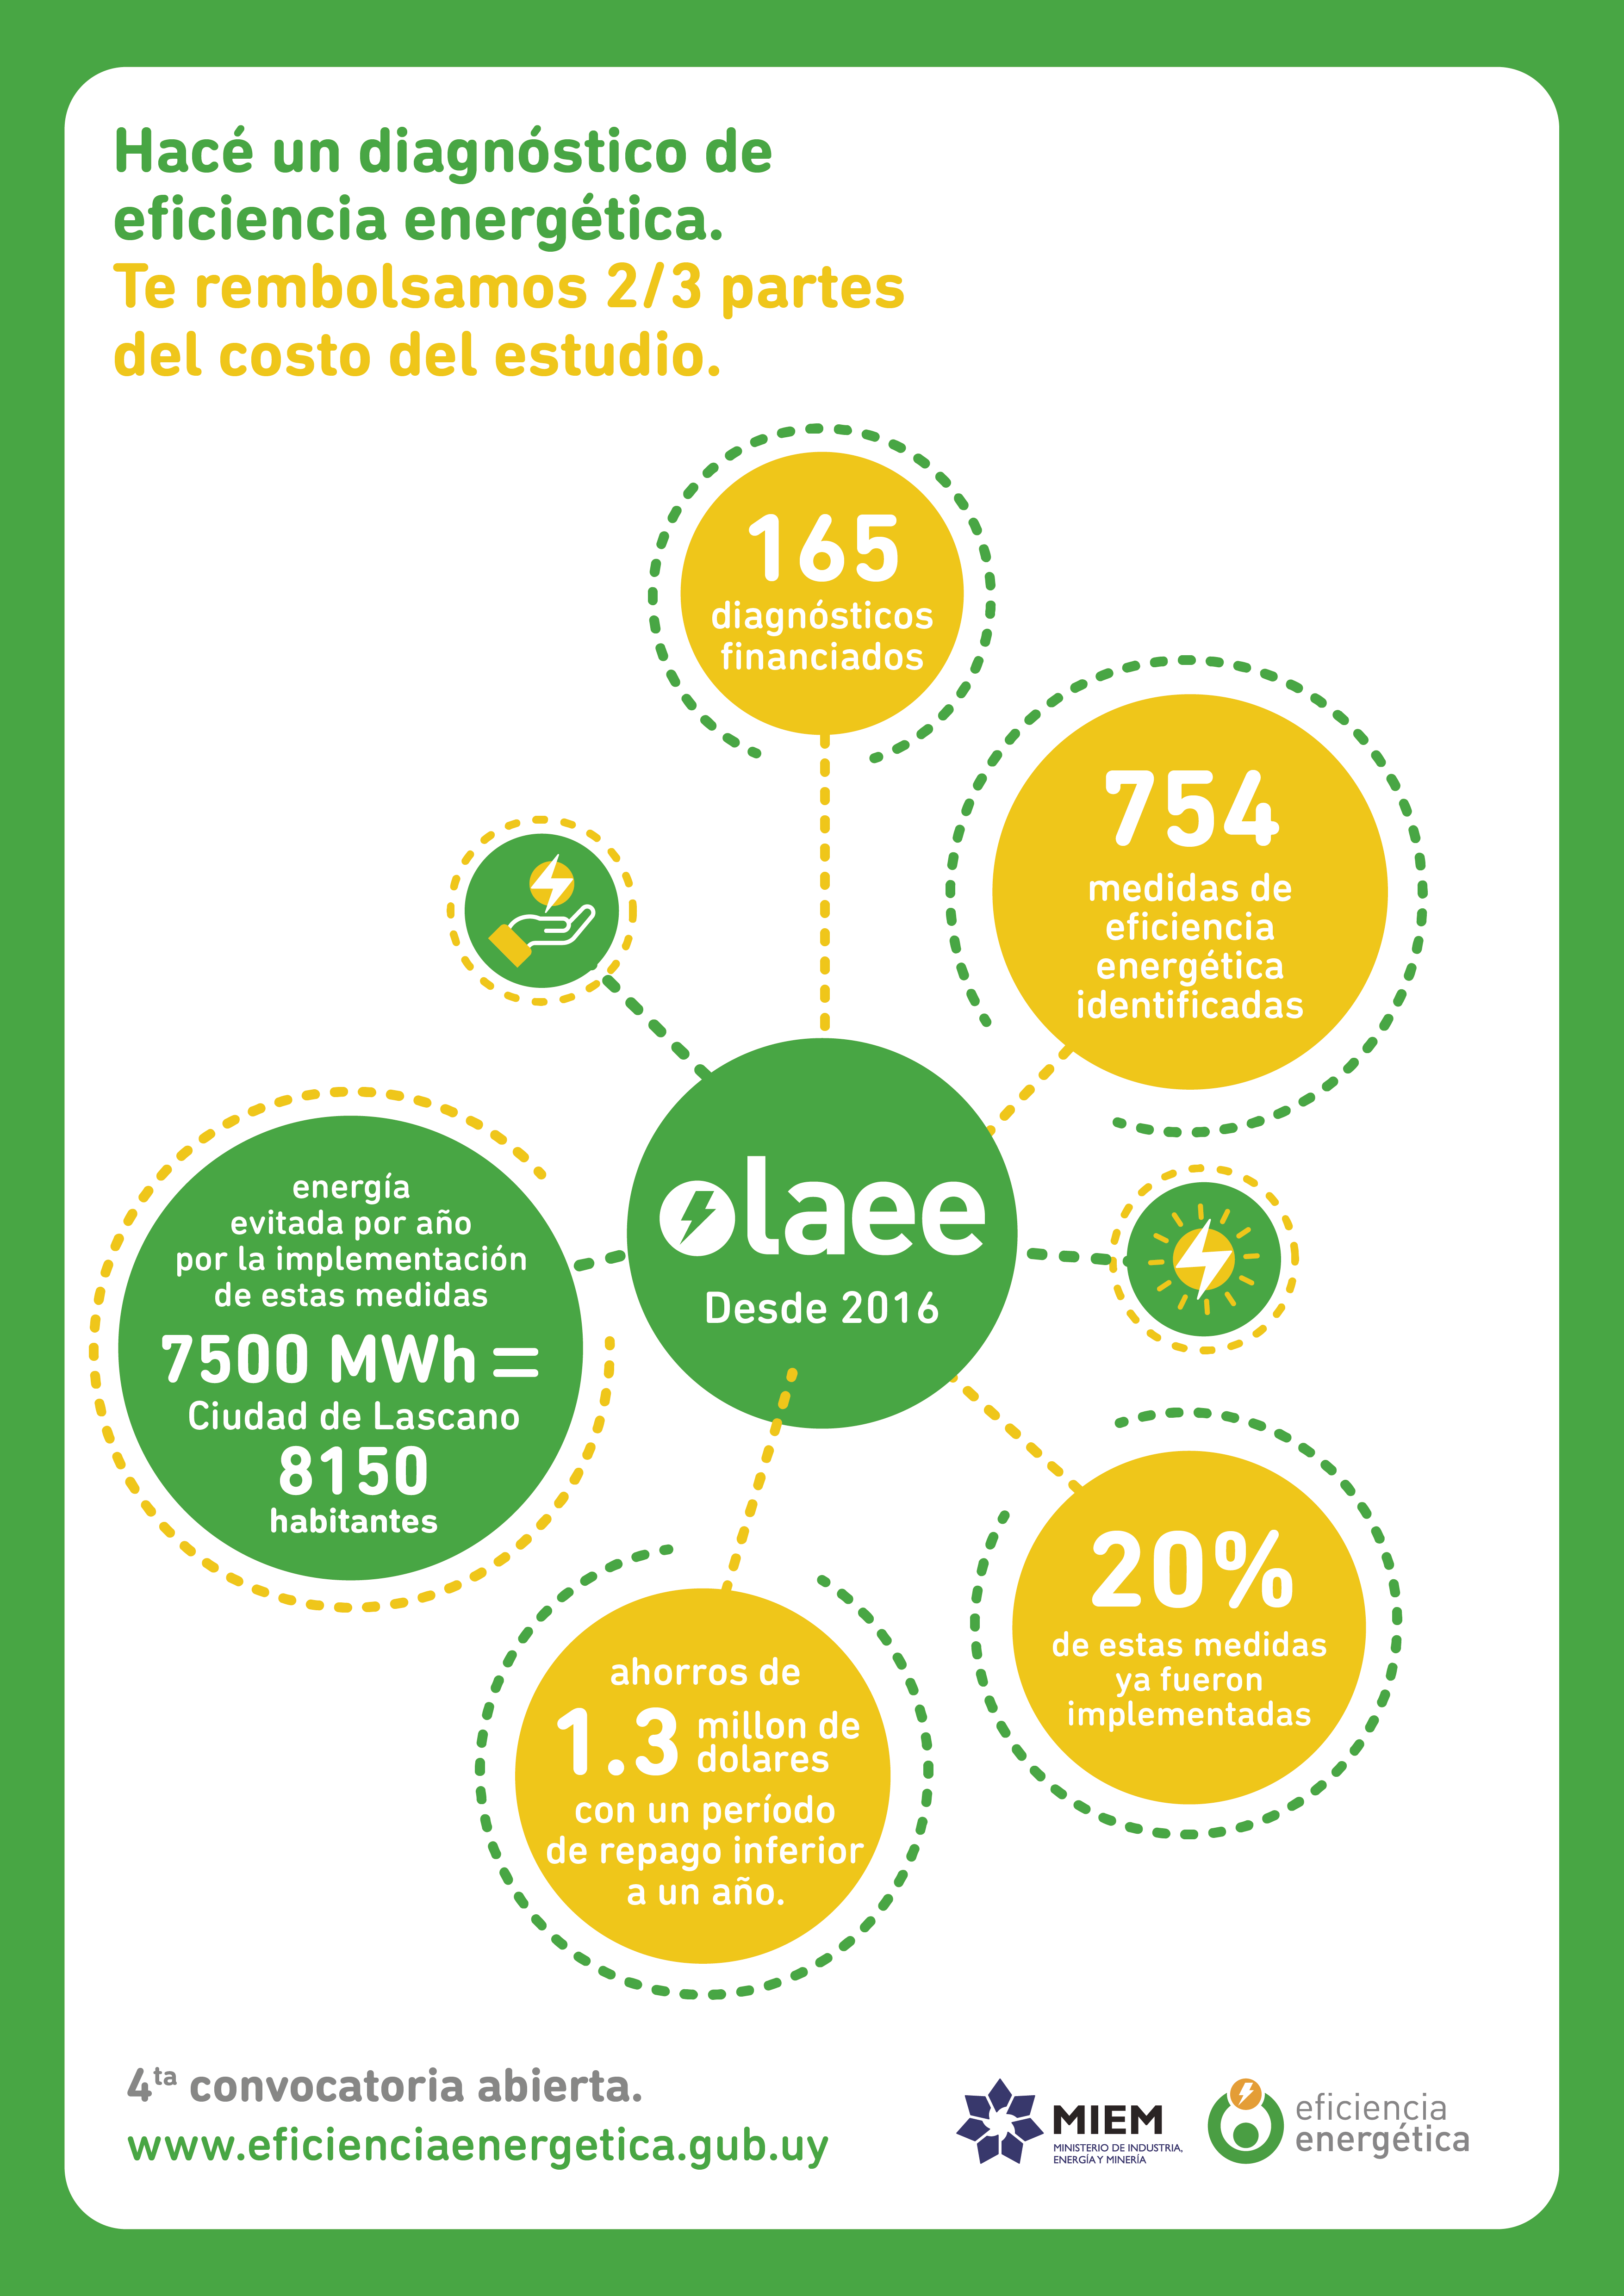 EE_Laee 2020_Infografia.png - 